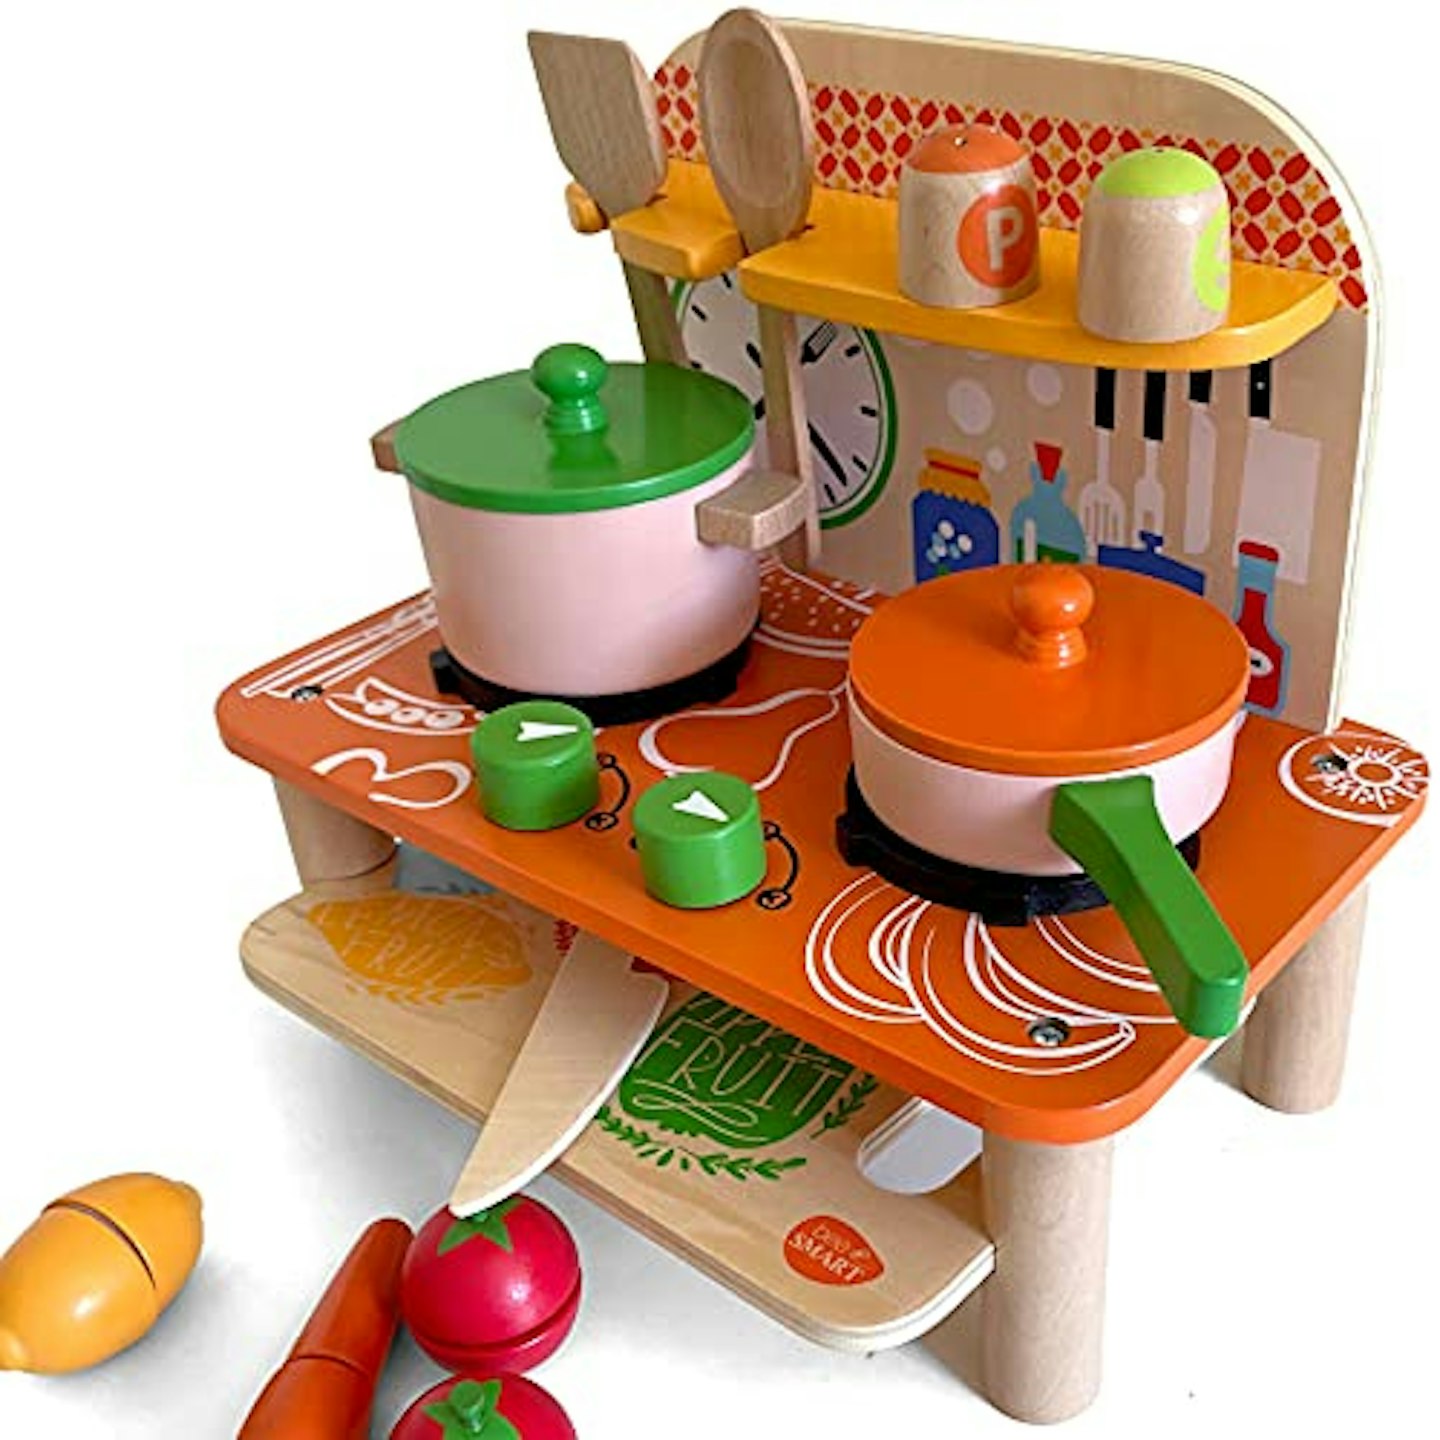 Bee Smart Kids Kitchen Toy Toddler Play Kitchen Playset